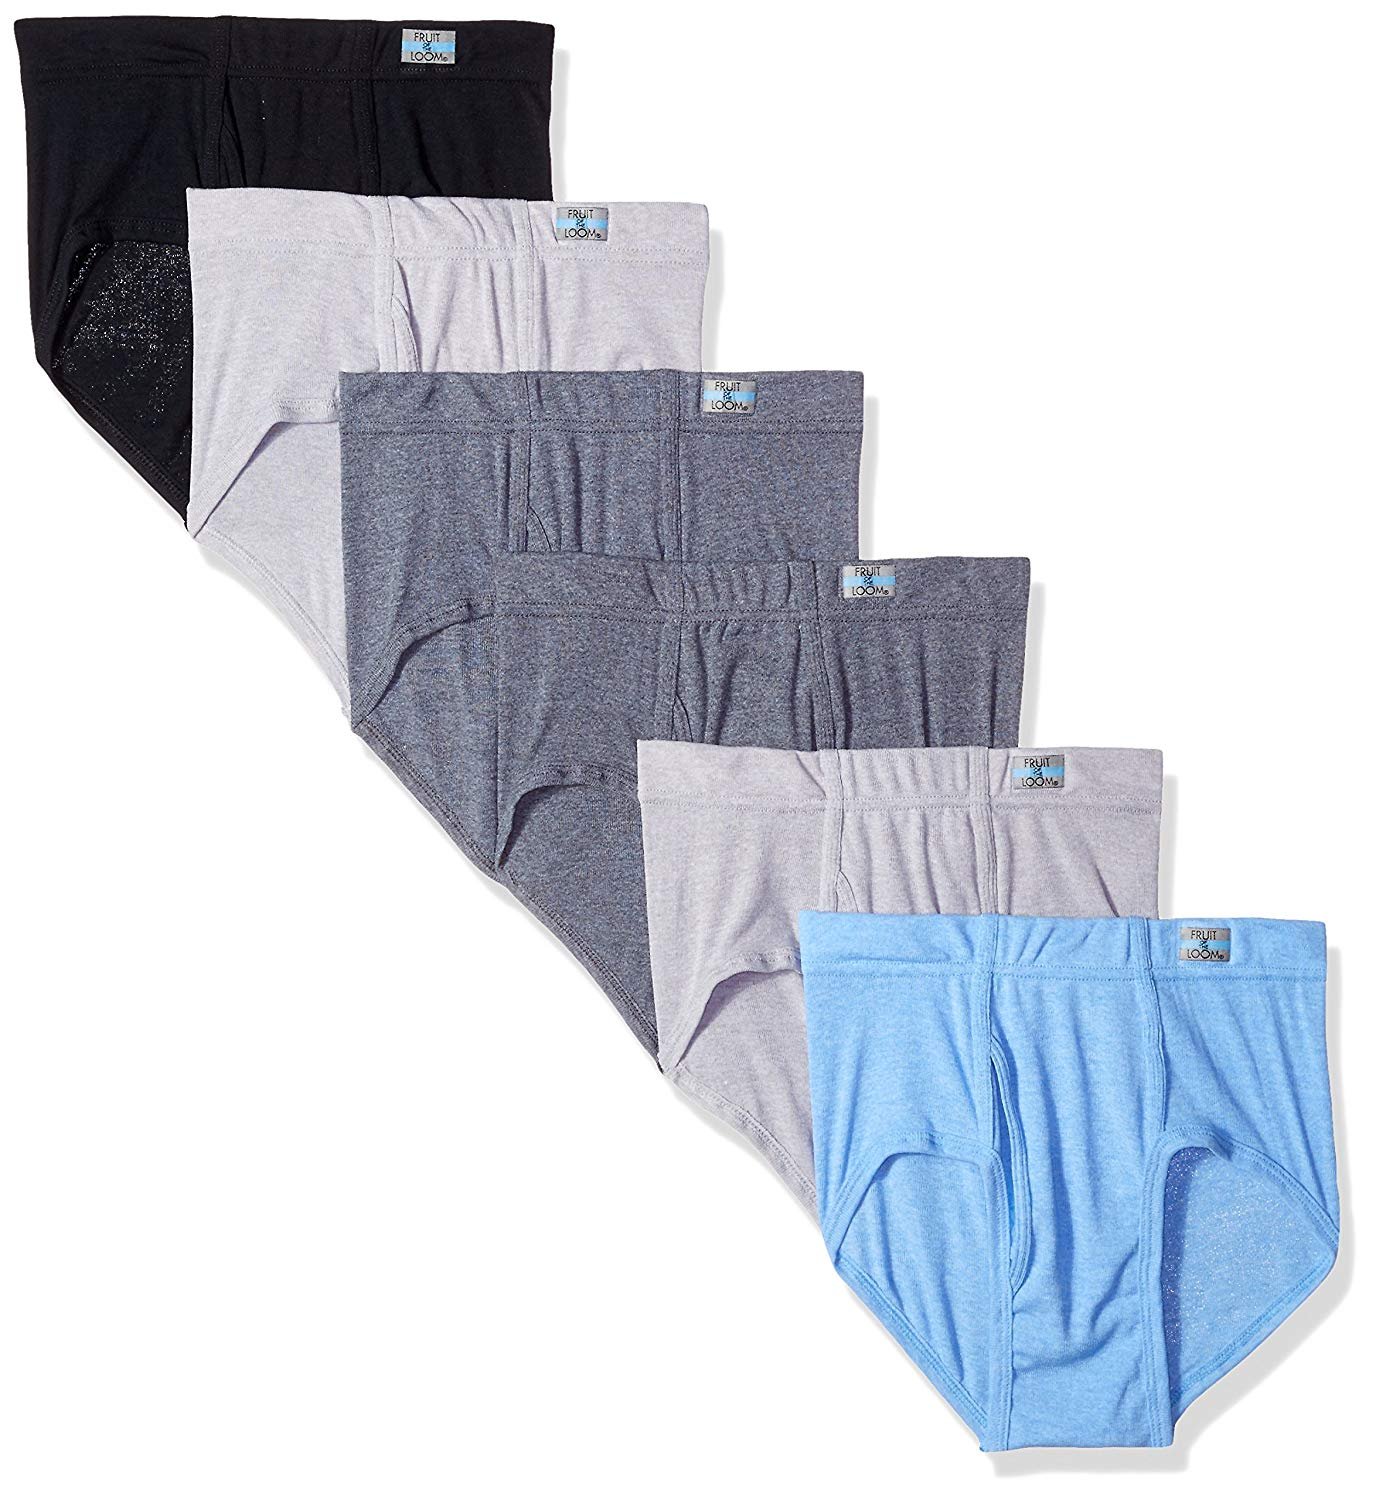 Fruit of the Loom Men's Fashion Briefs Underwear S-XL (Pack of 6)